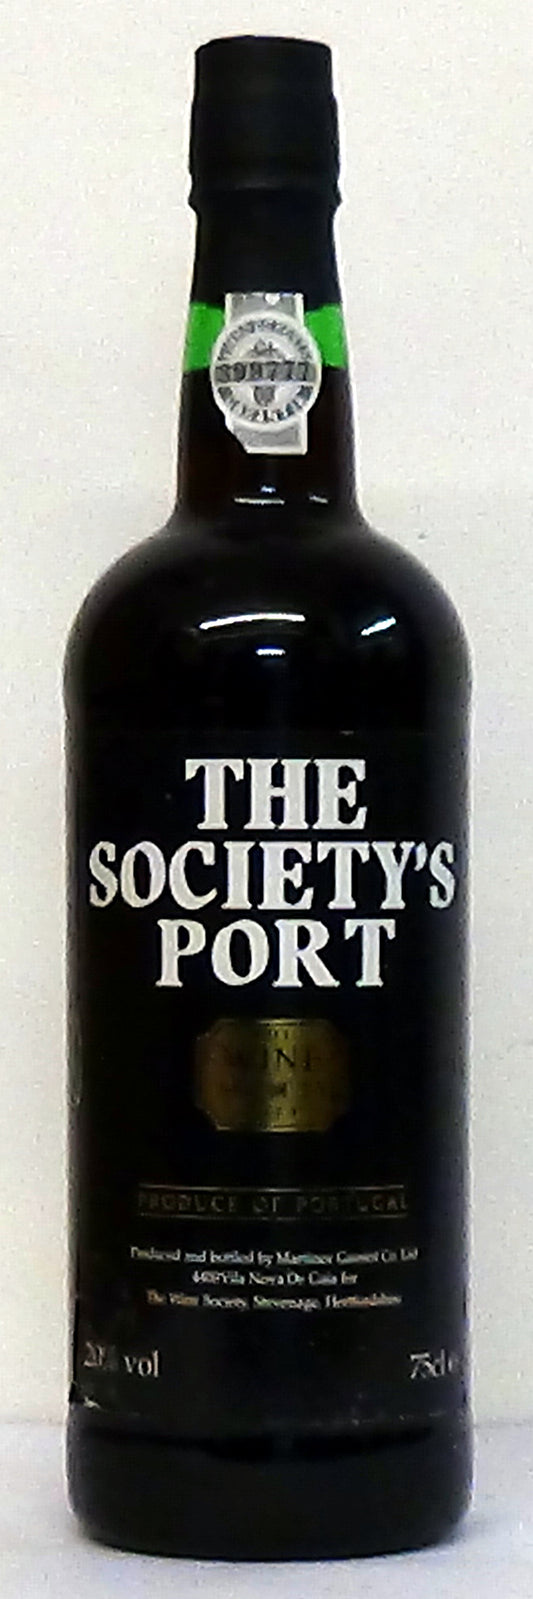 NV 1990s The Society's Port